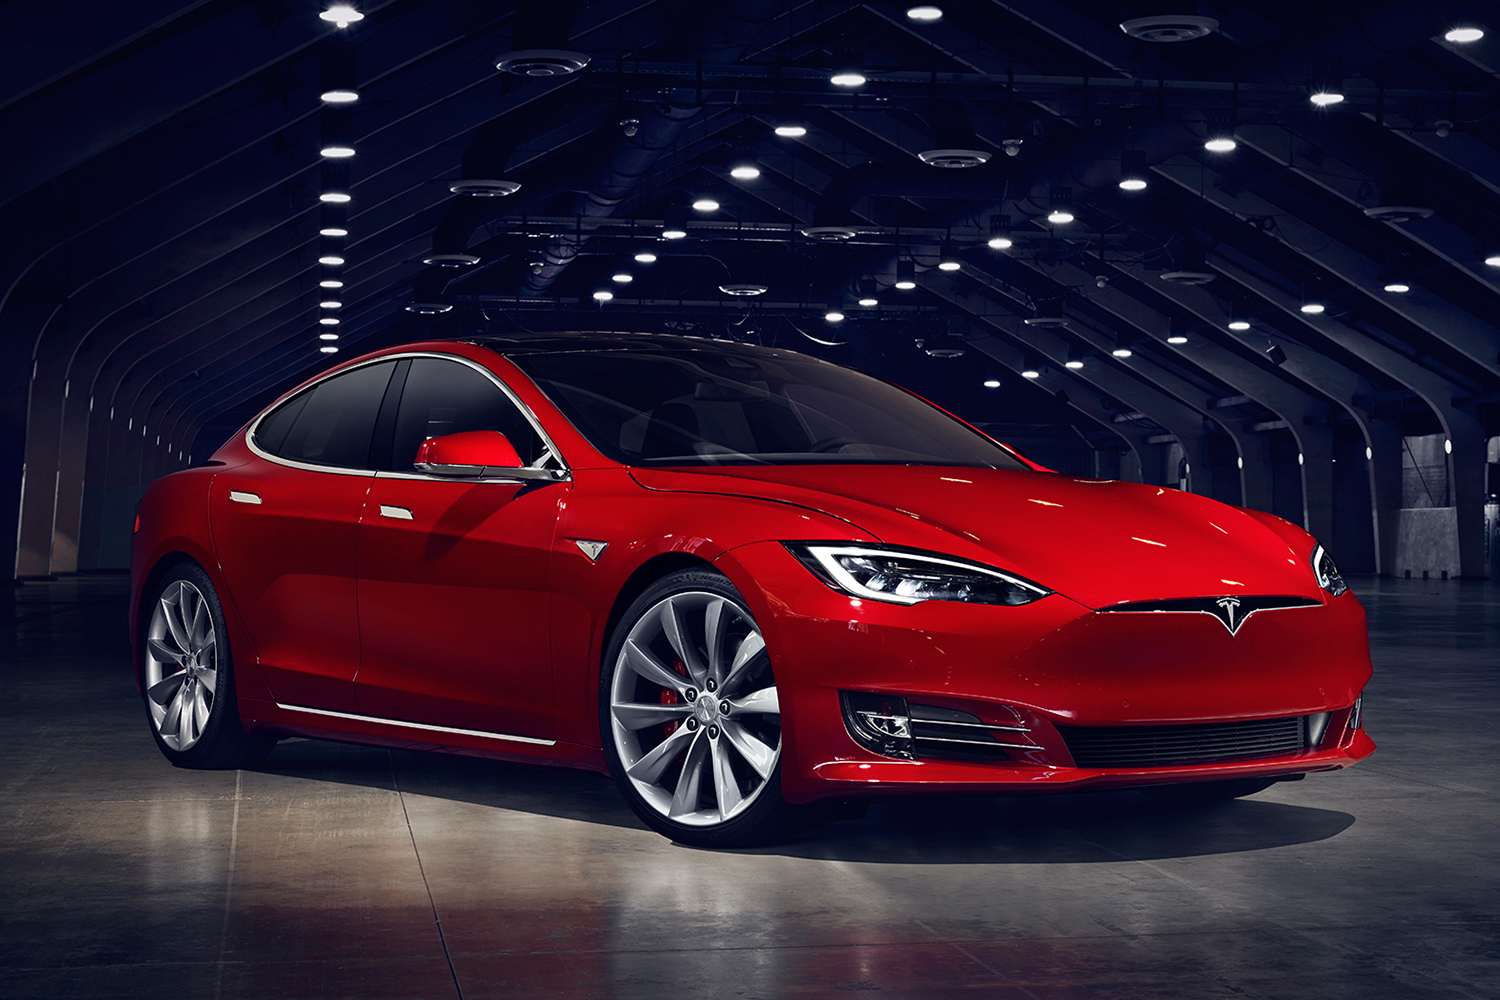 Red Tesla Model S electric sedan in a hangar